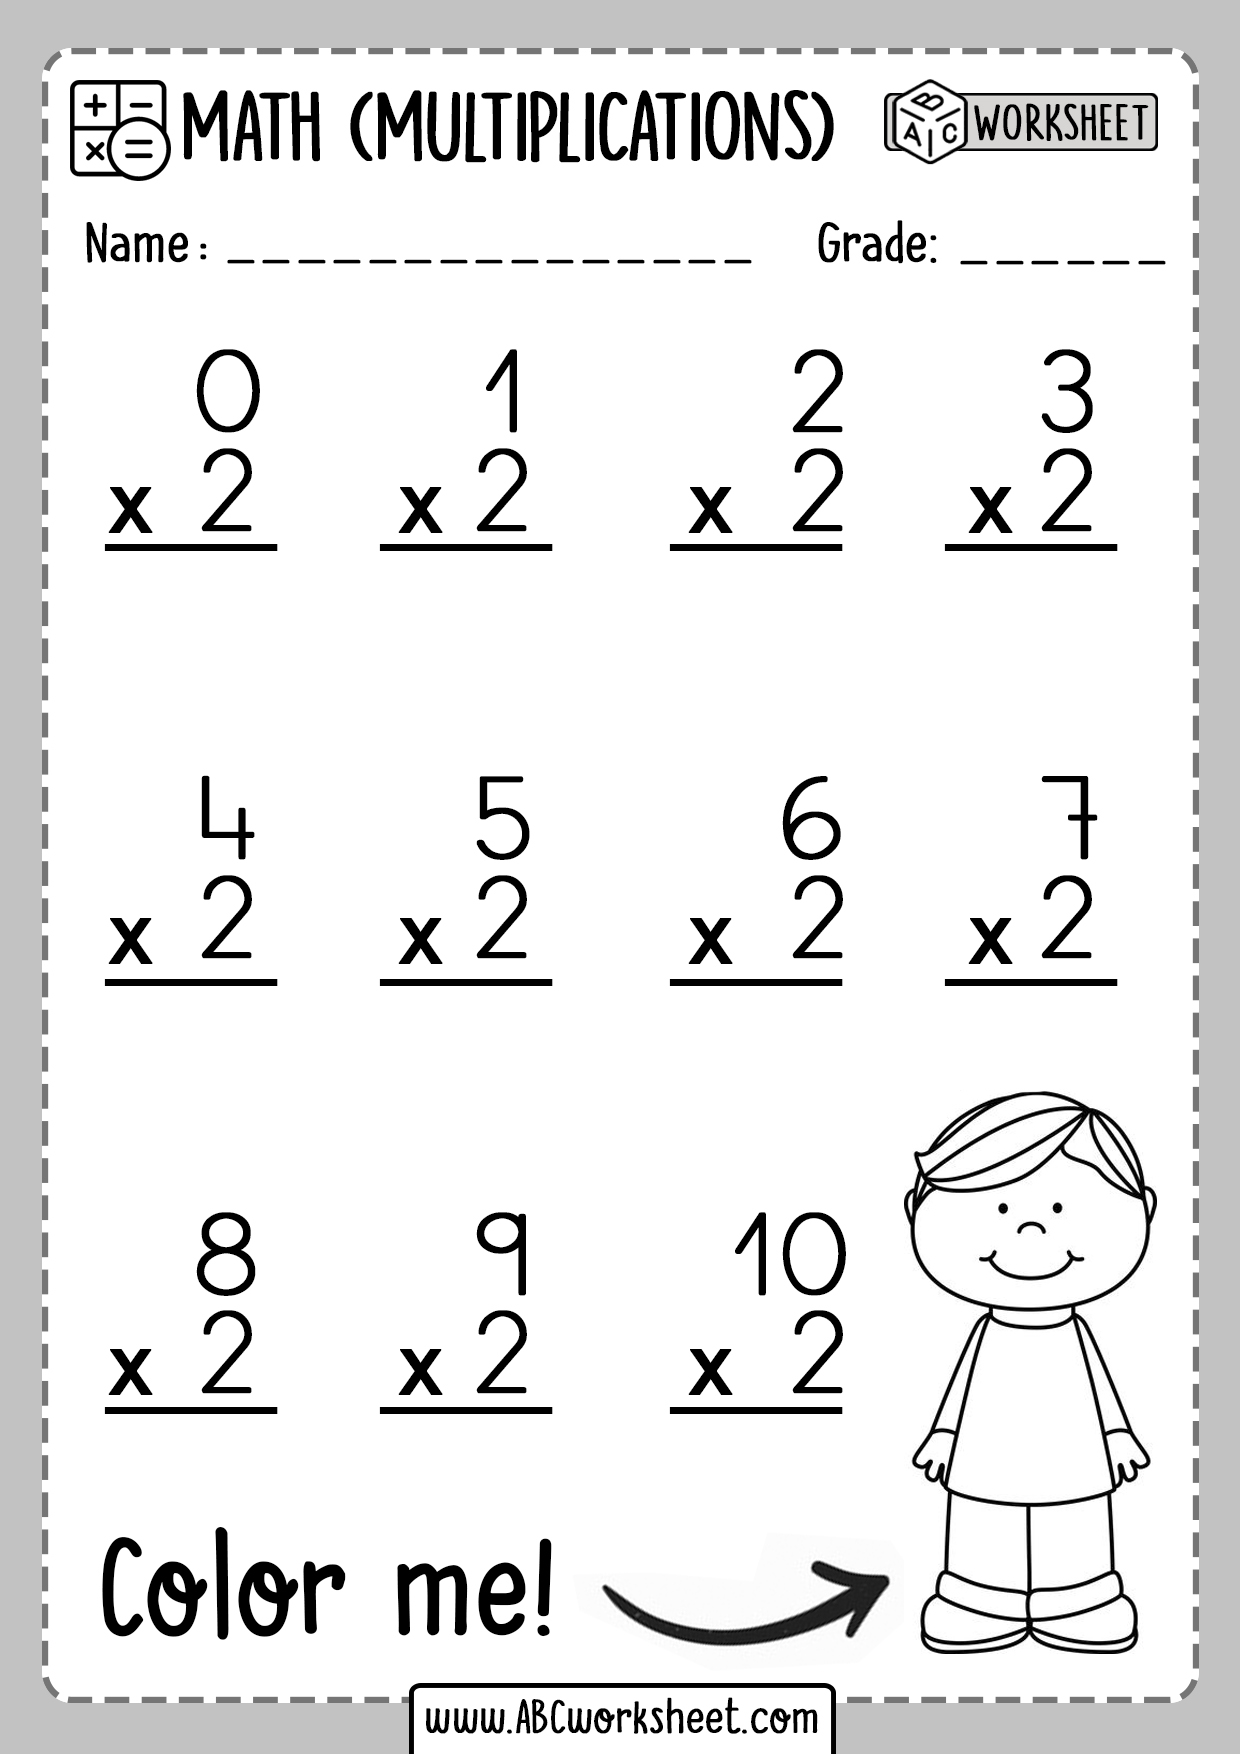  Multiplication Table Printables Worksheets D06